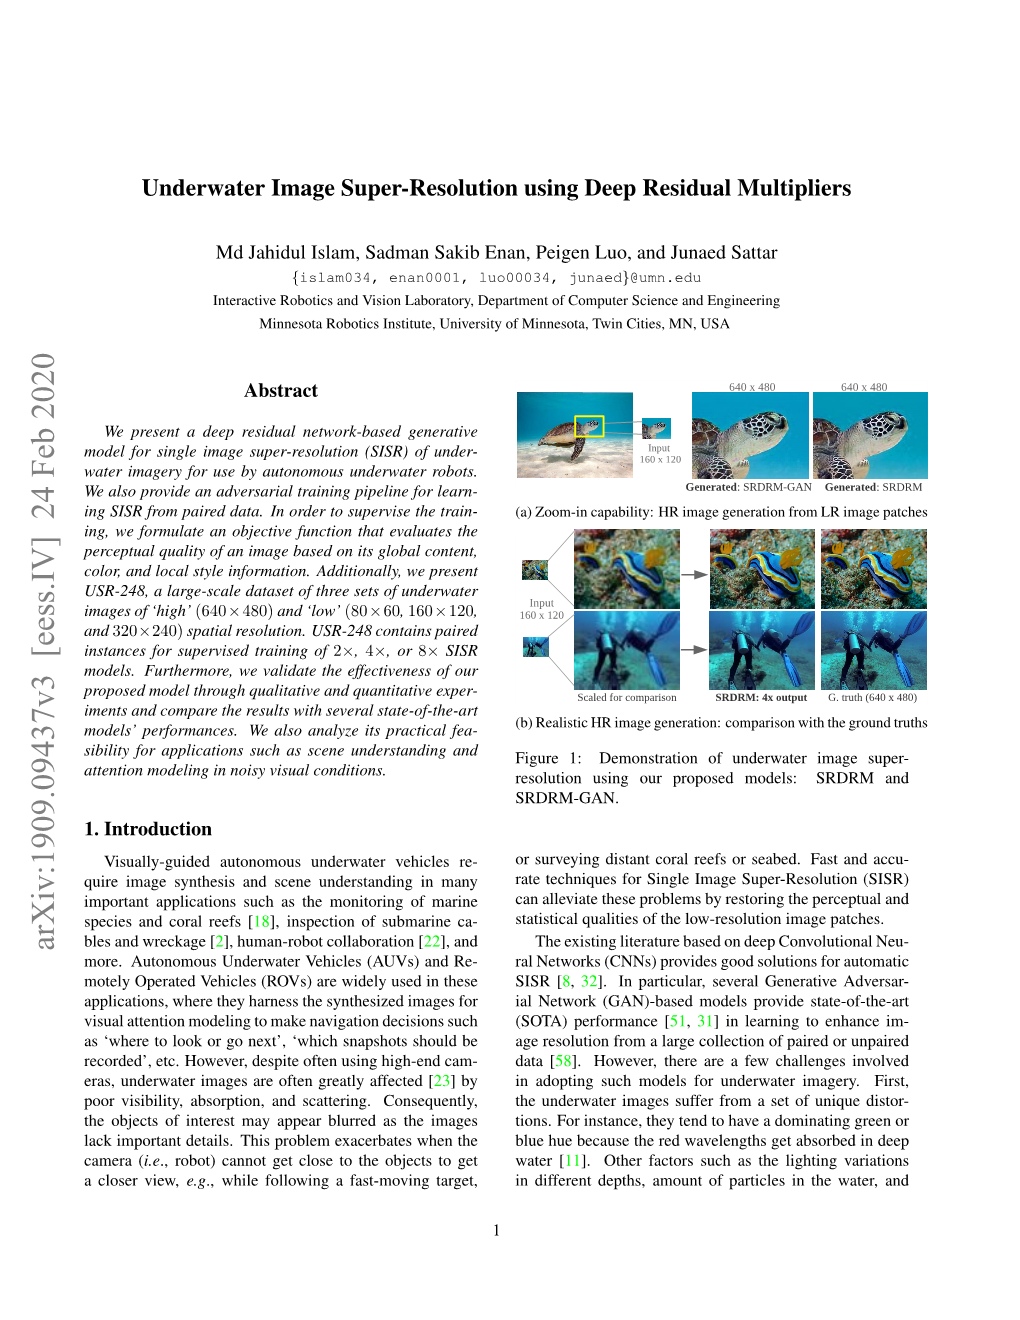 Underwater Image Super-Resolution Using Deep Residual Multipliers